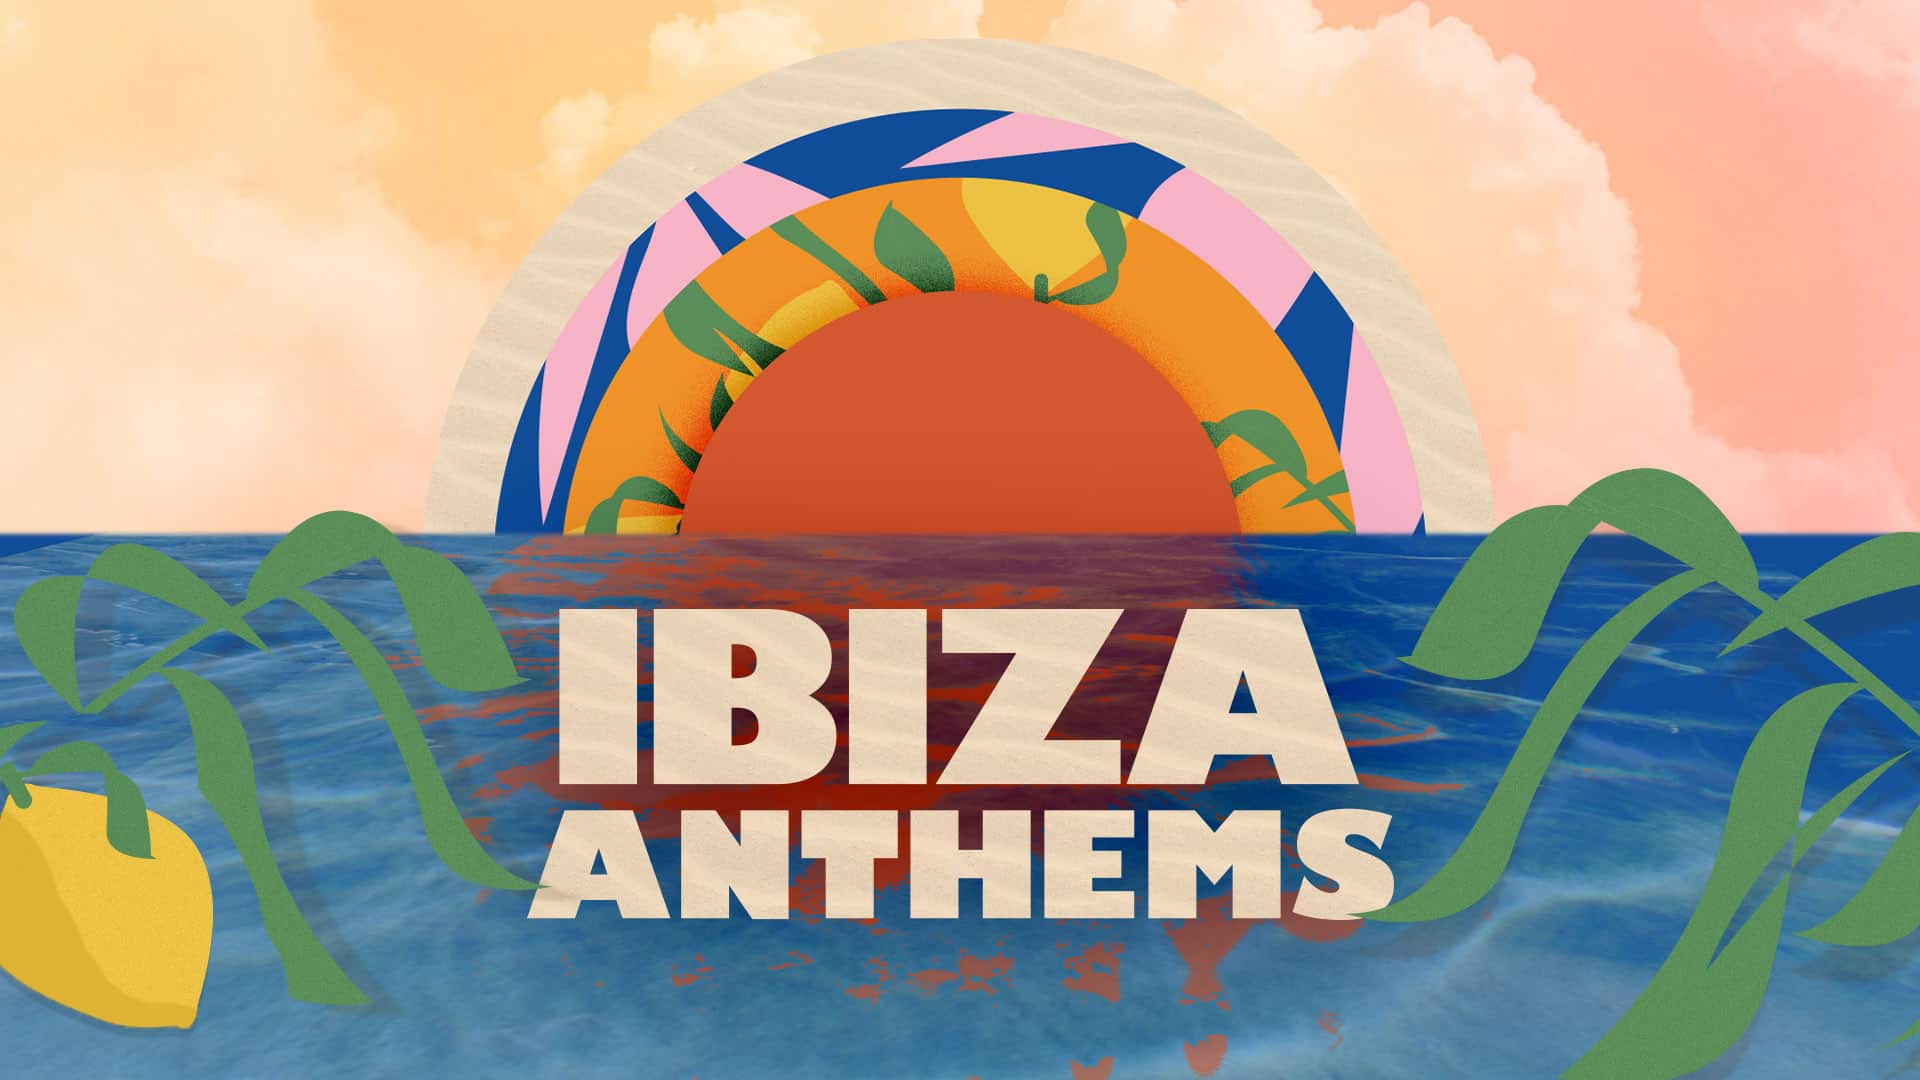 Ibiza Anthems event banner